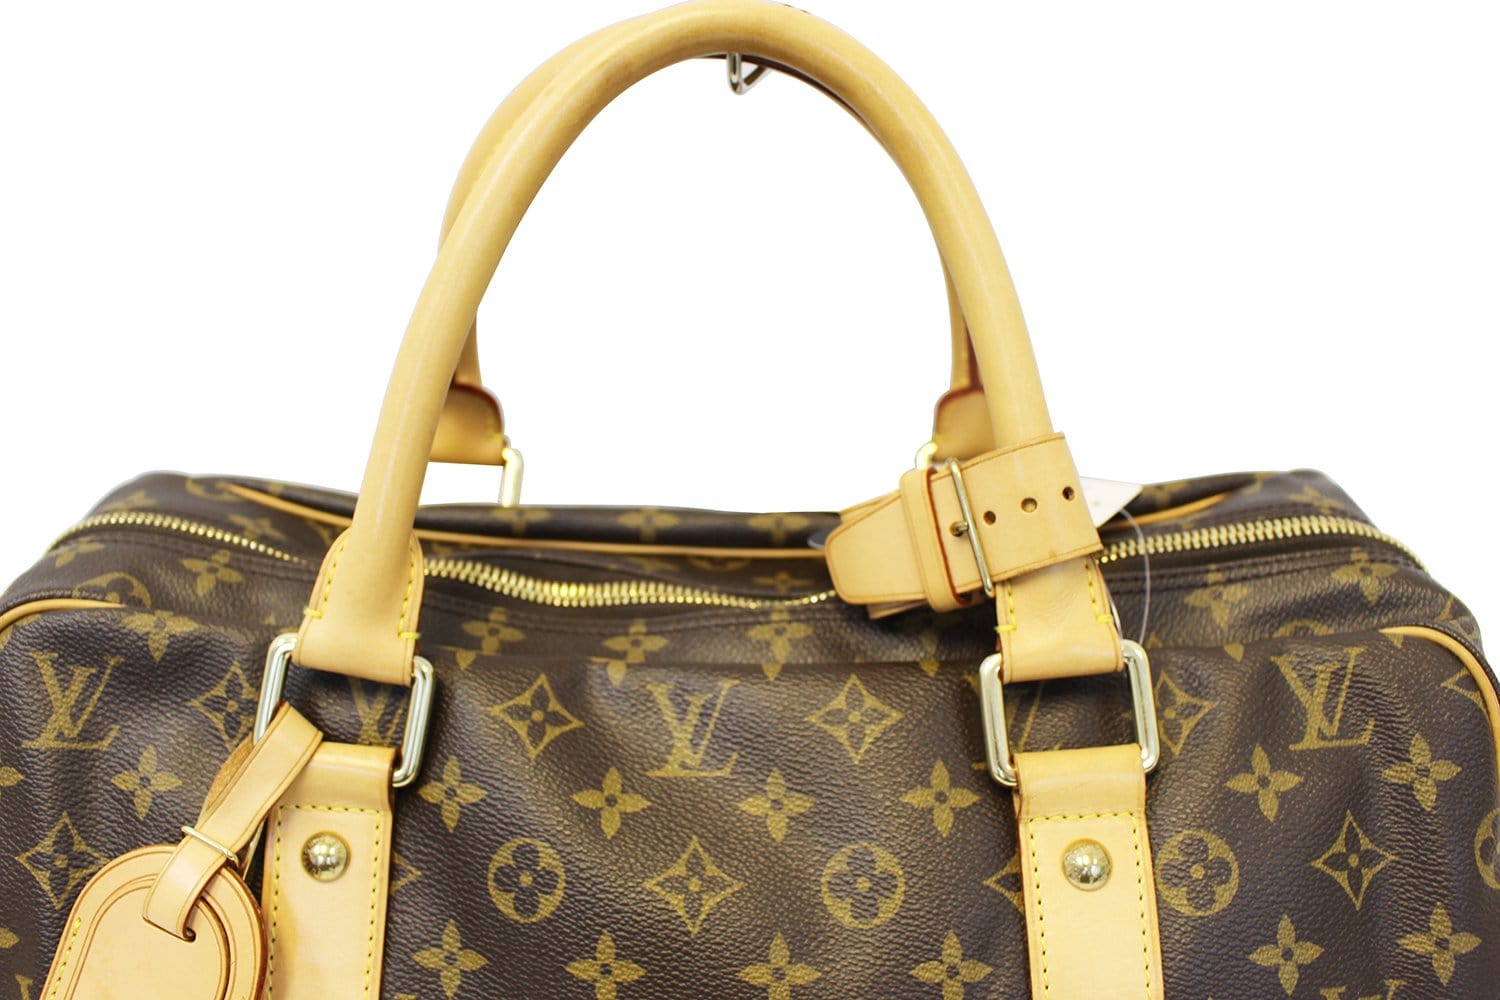 Designer Travel Bags  LOUIS VUITTON ® - Louis Vuitton